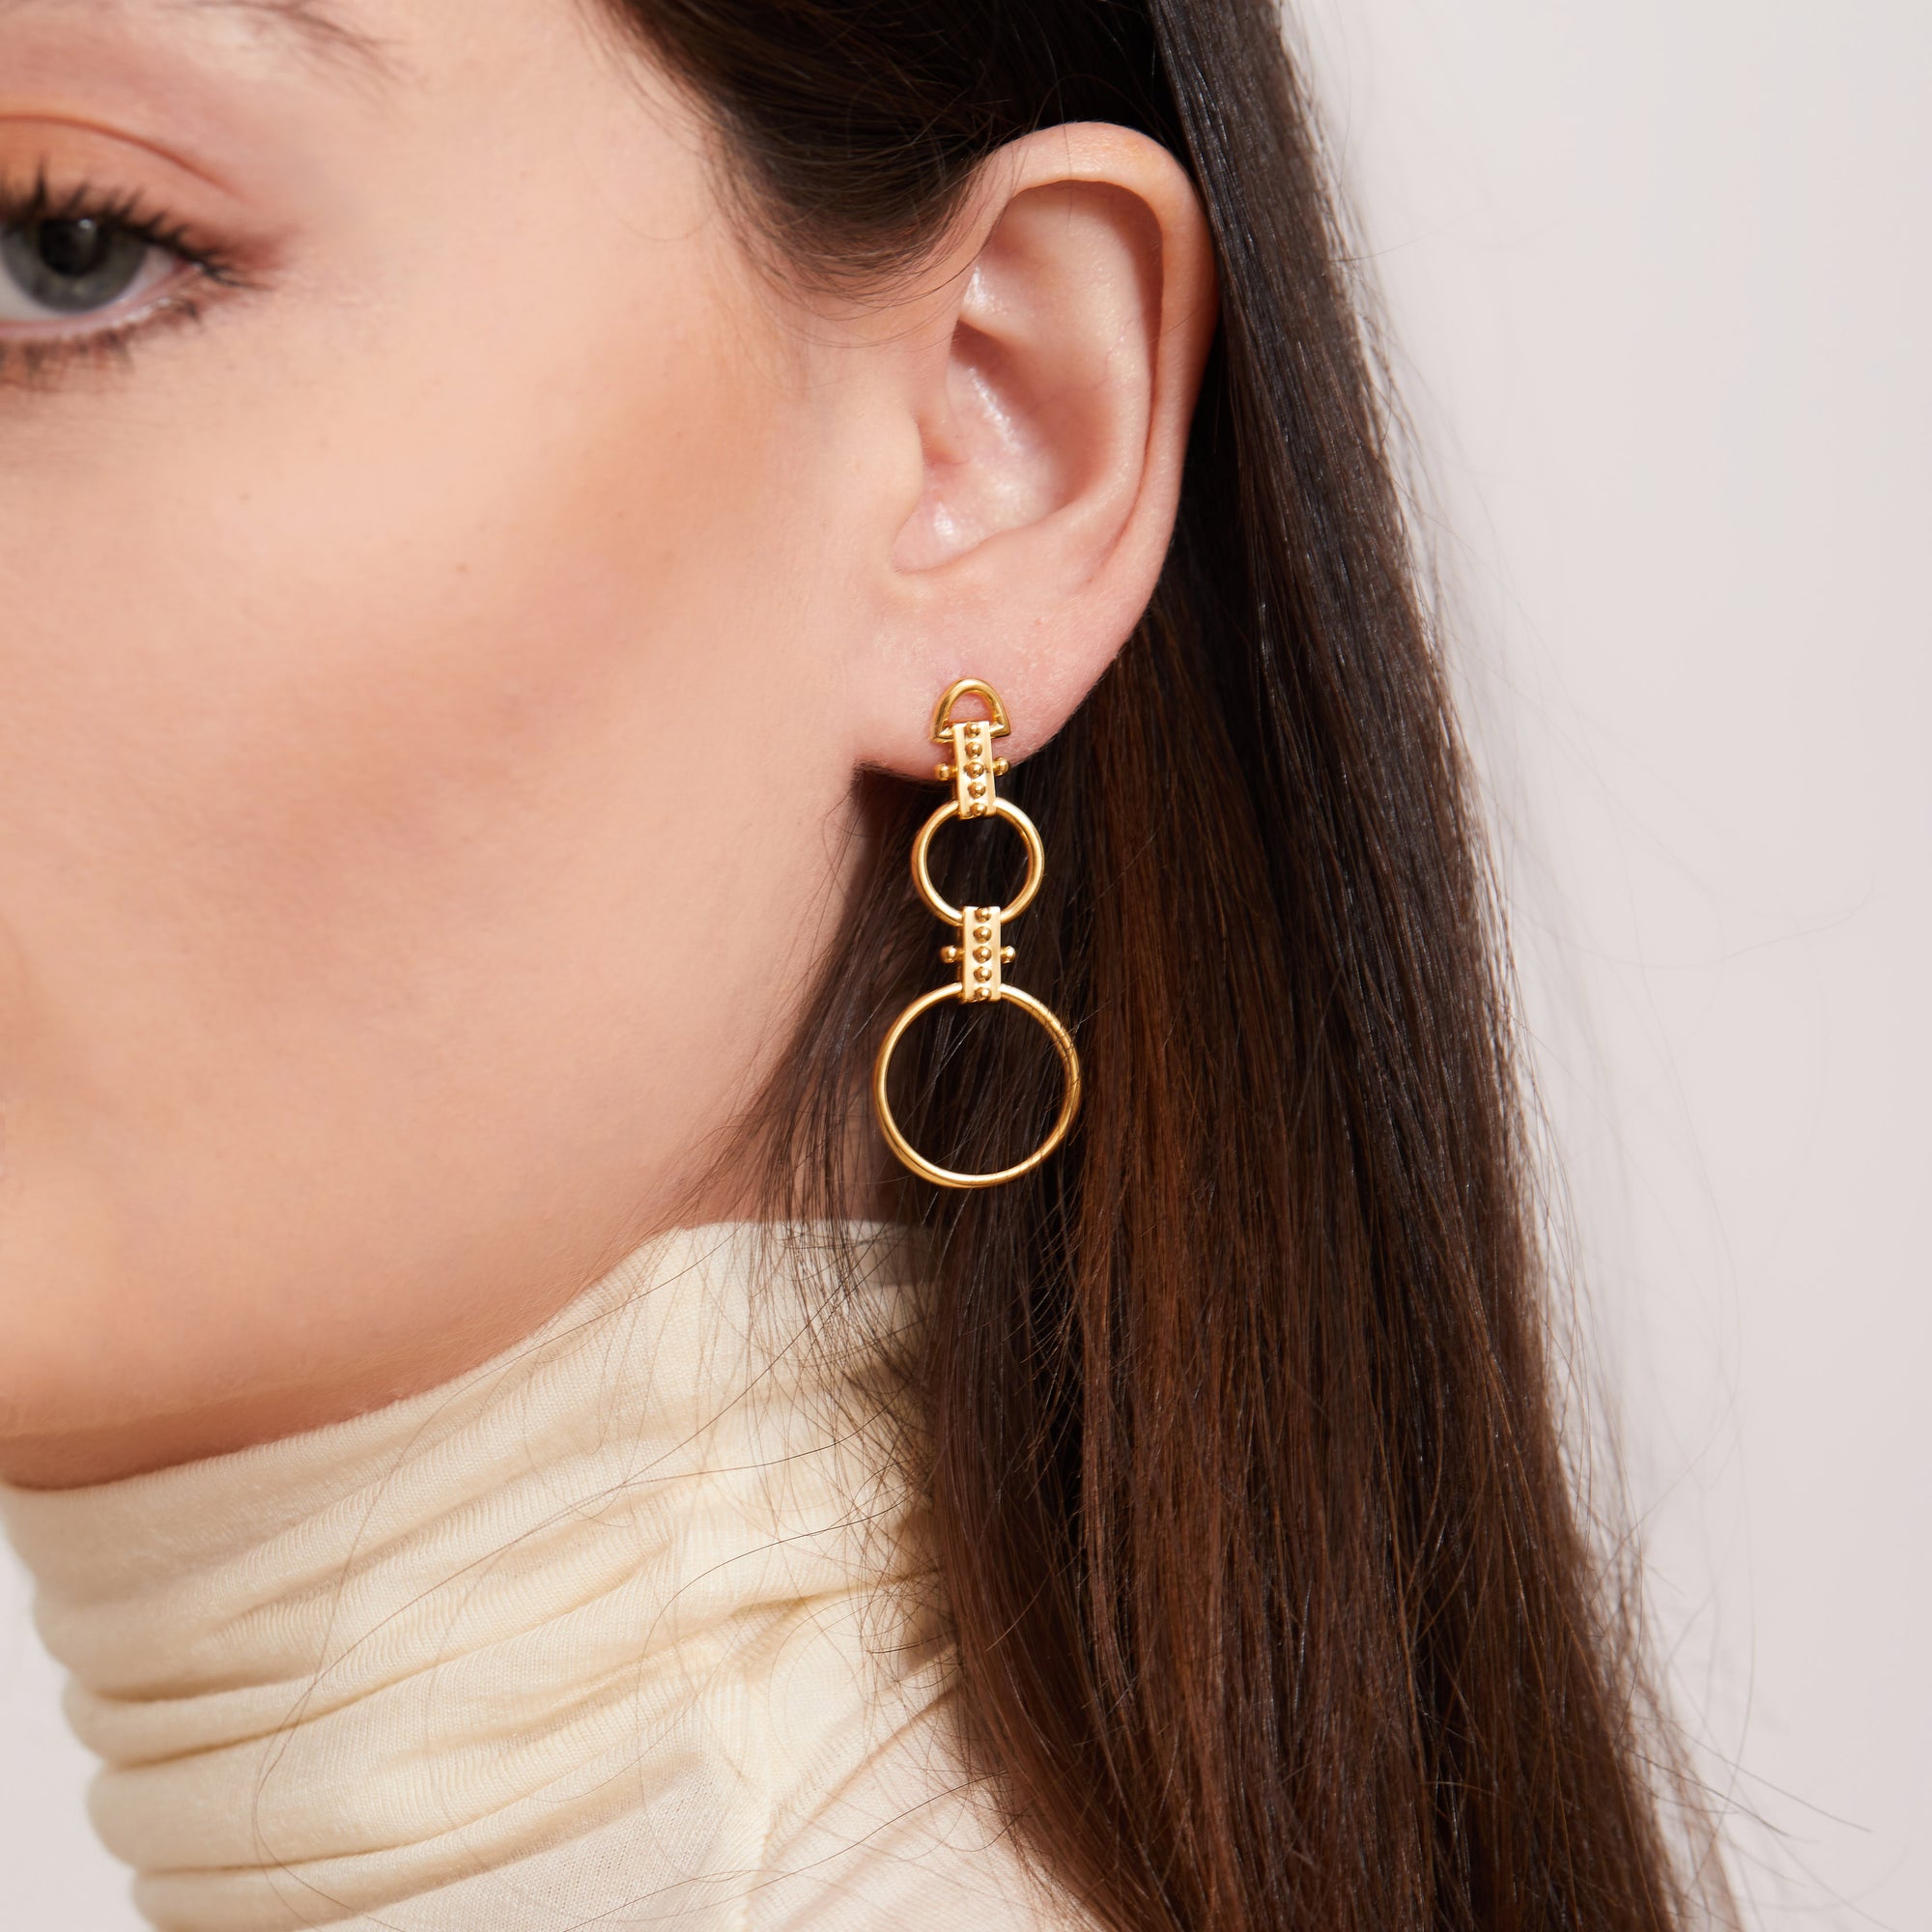 gold vermeil drop earrings